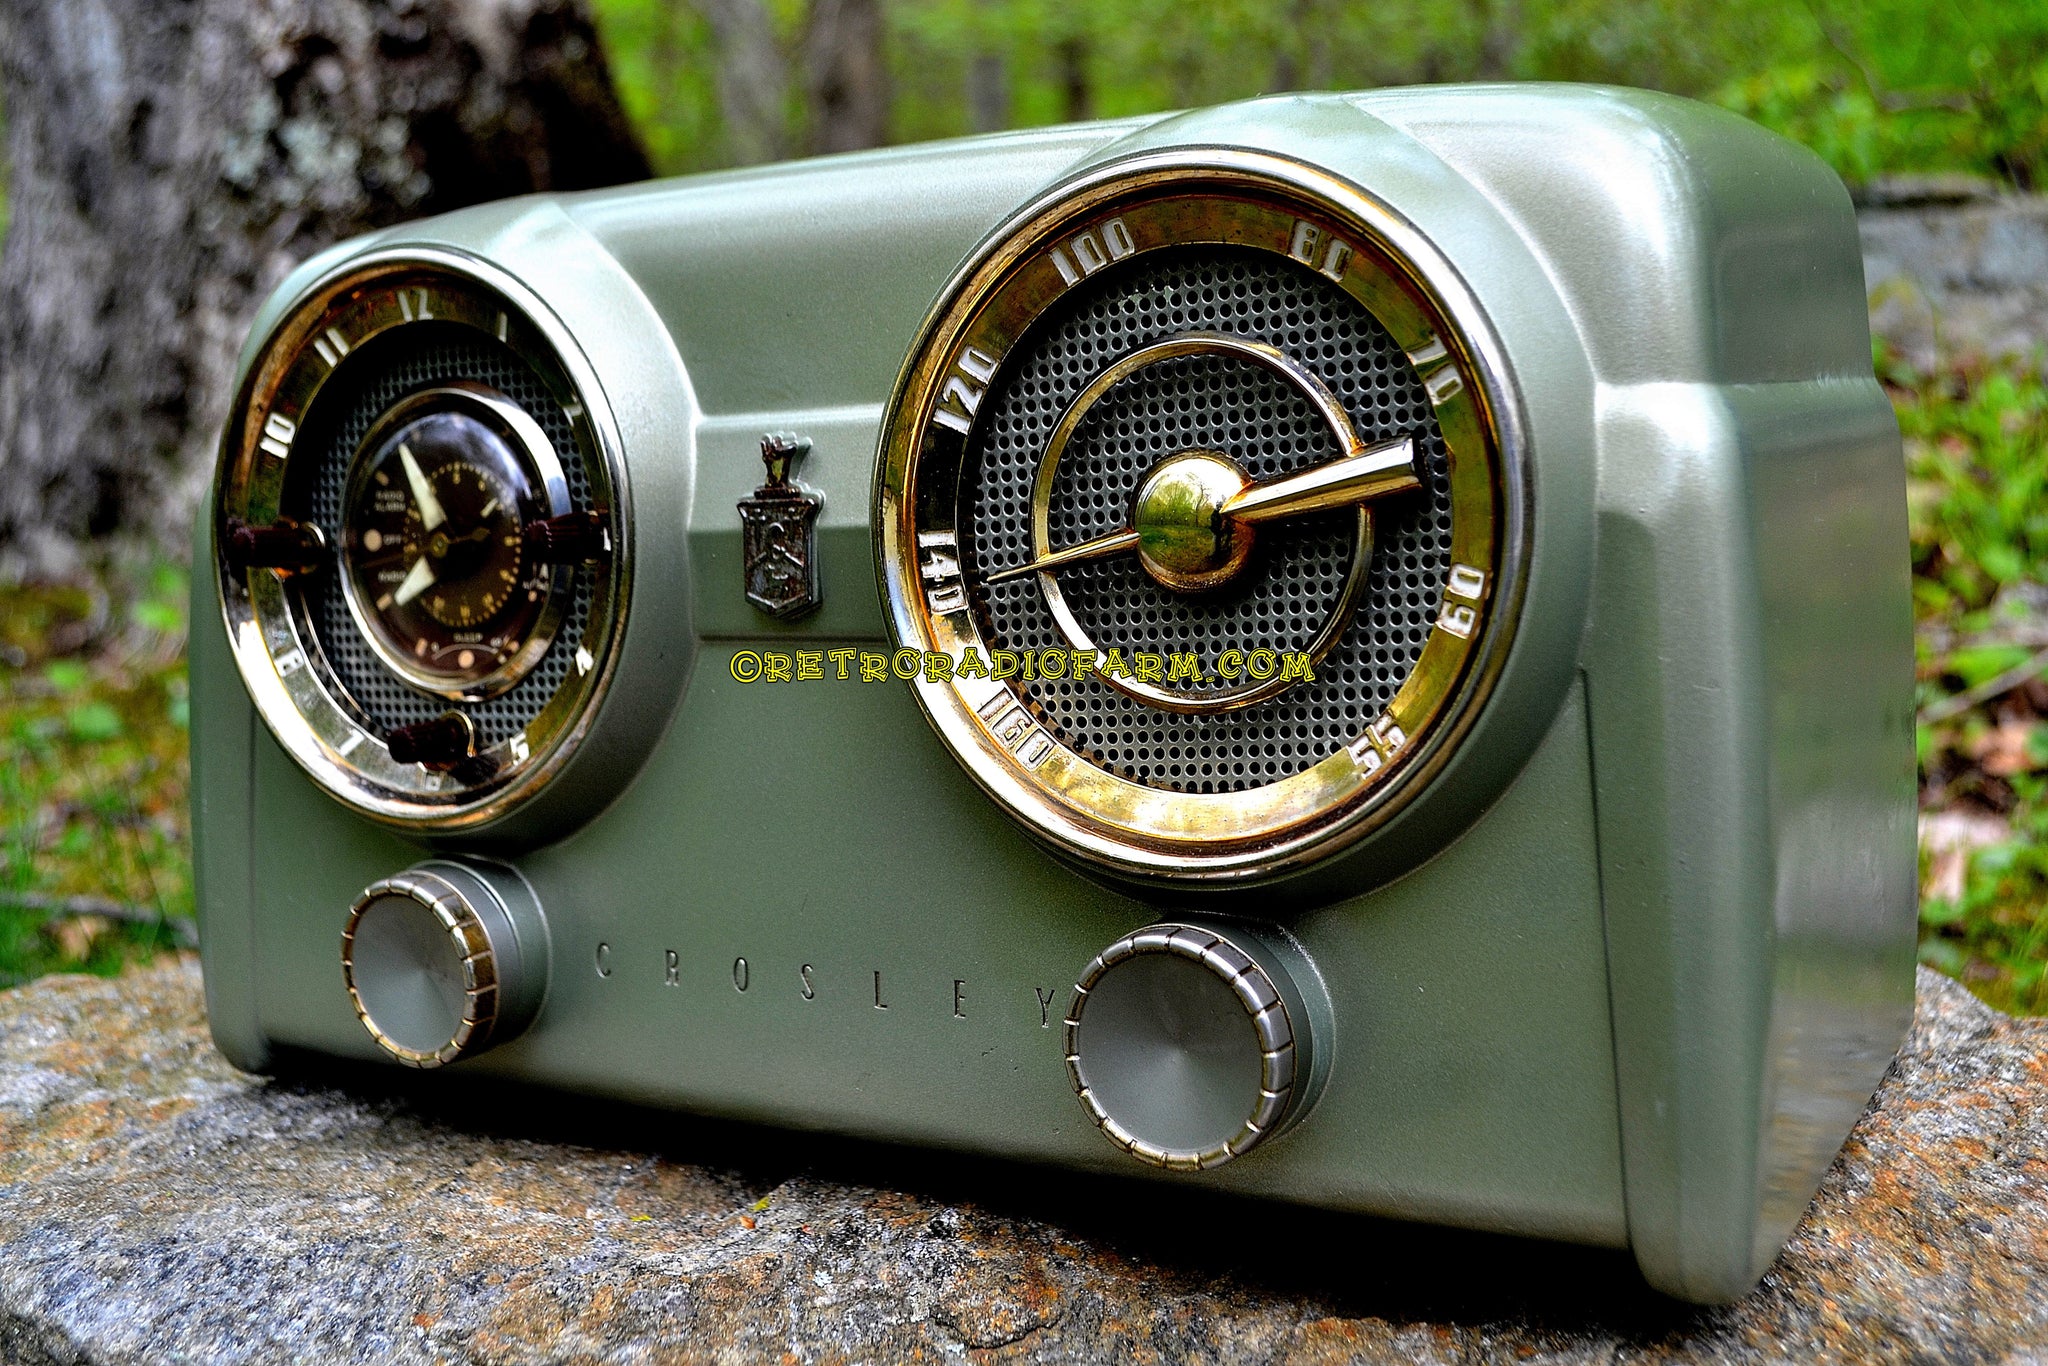 crosley clock radio